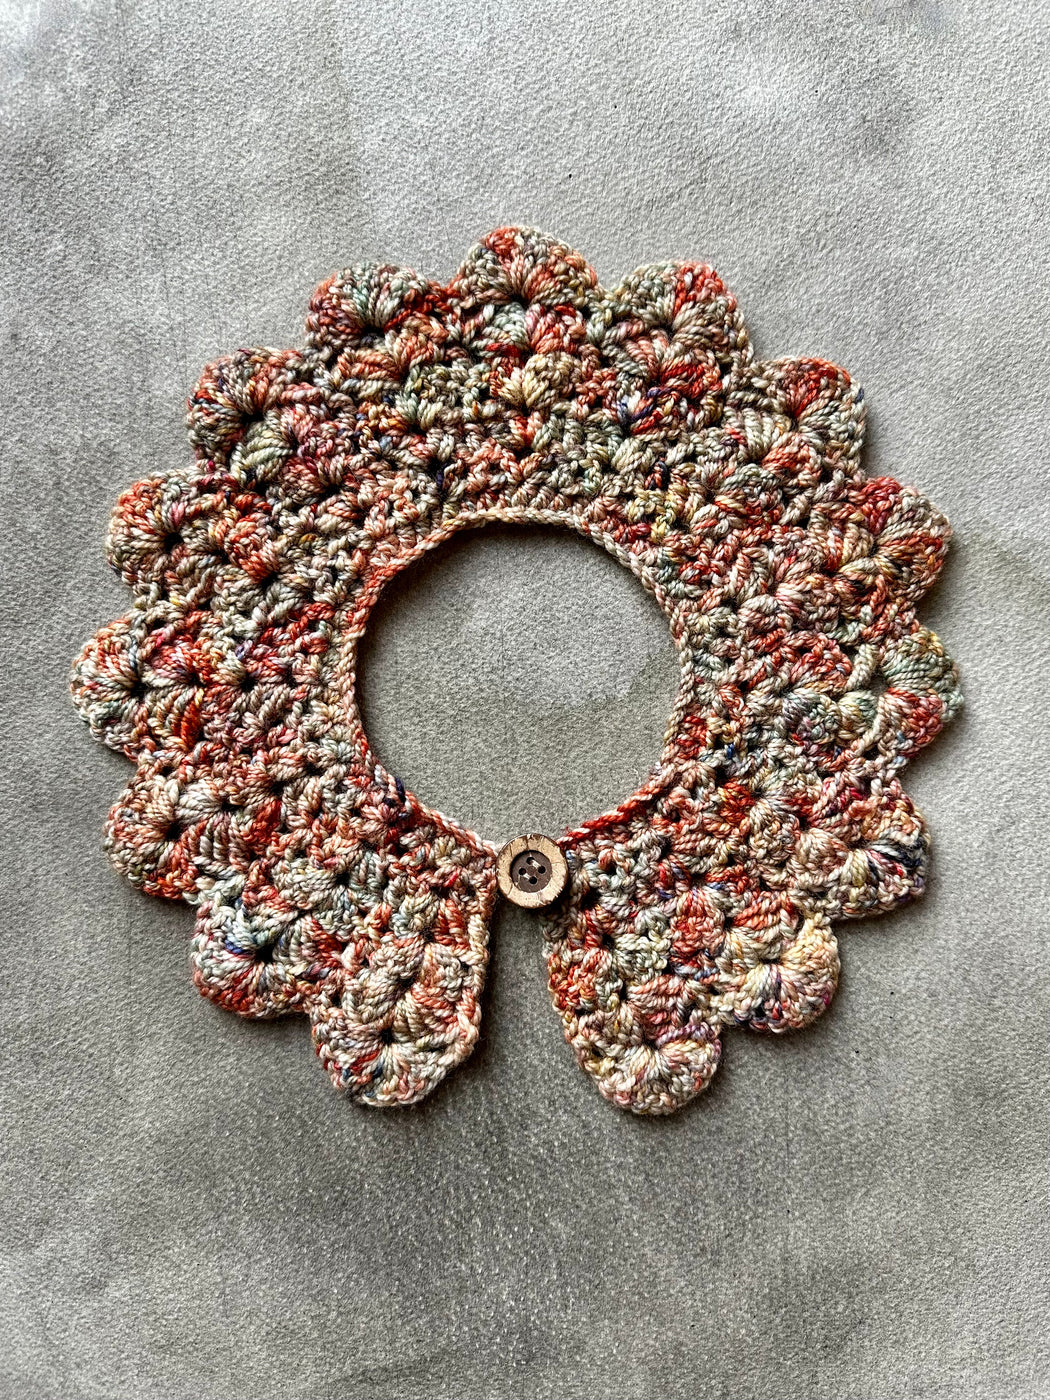 "Heather" Hand-Crocheted Collar by Albo